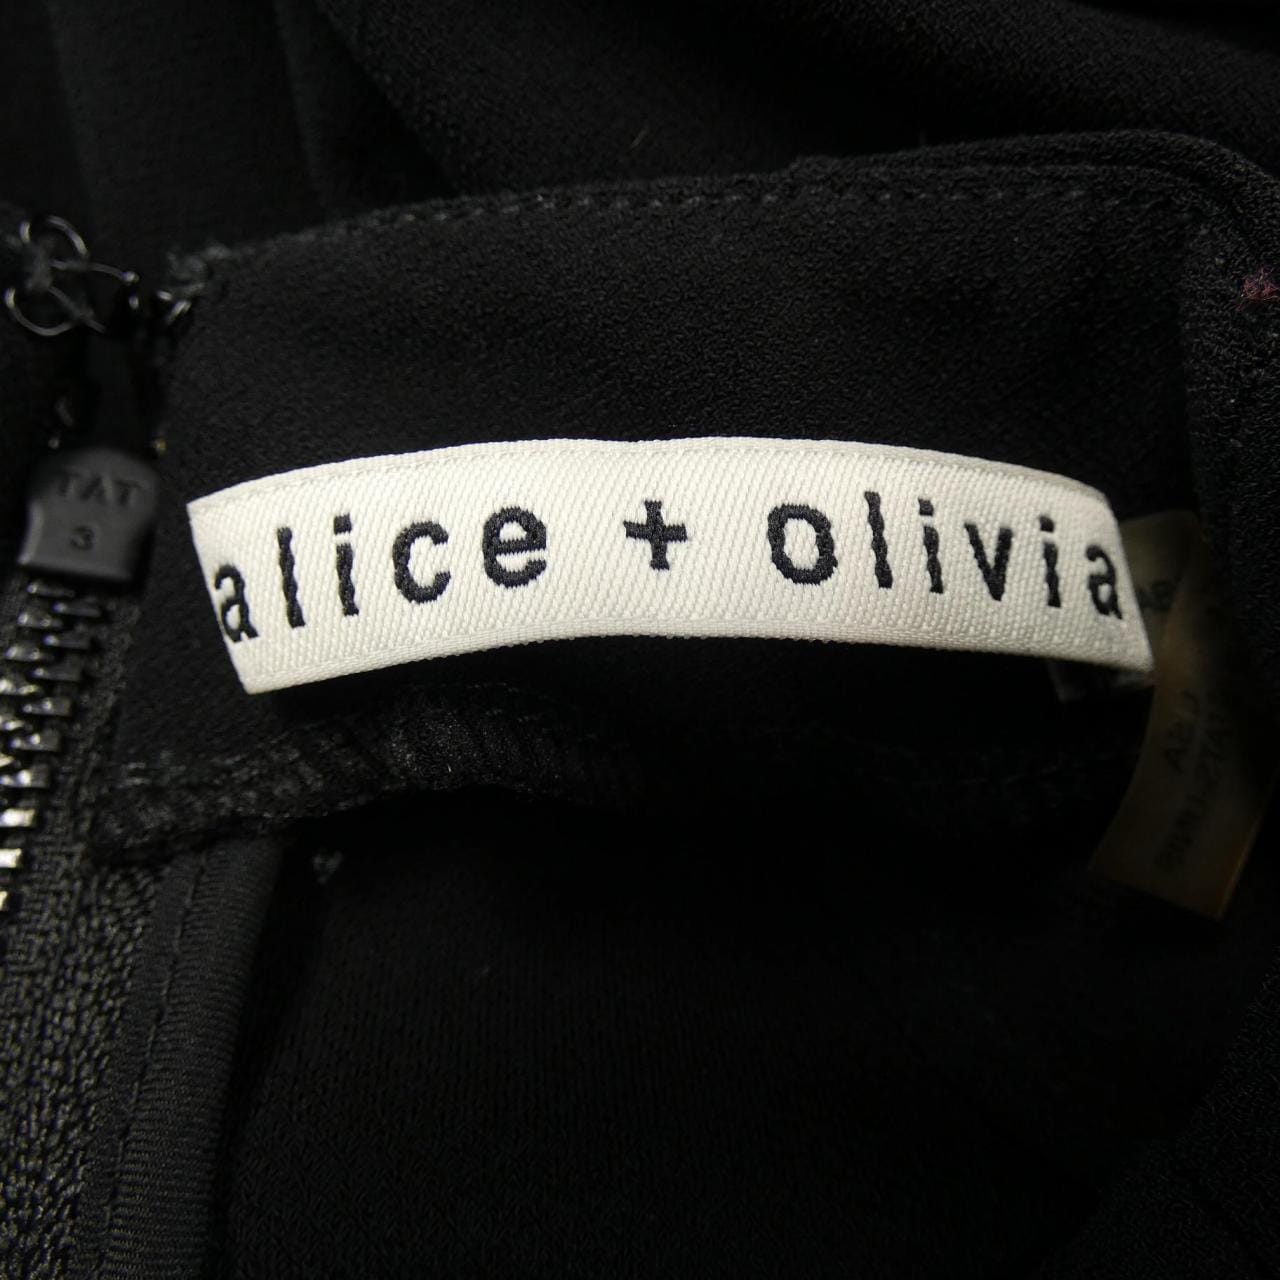 Alice and Olivia ALICE+OLIVIA tops